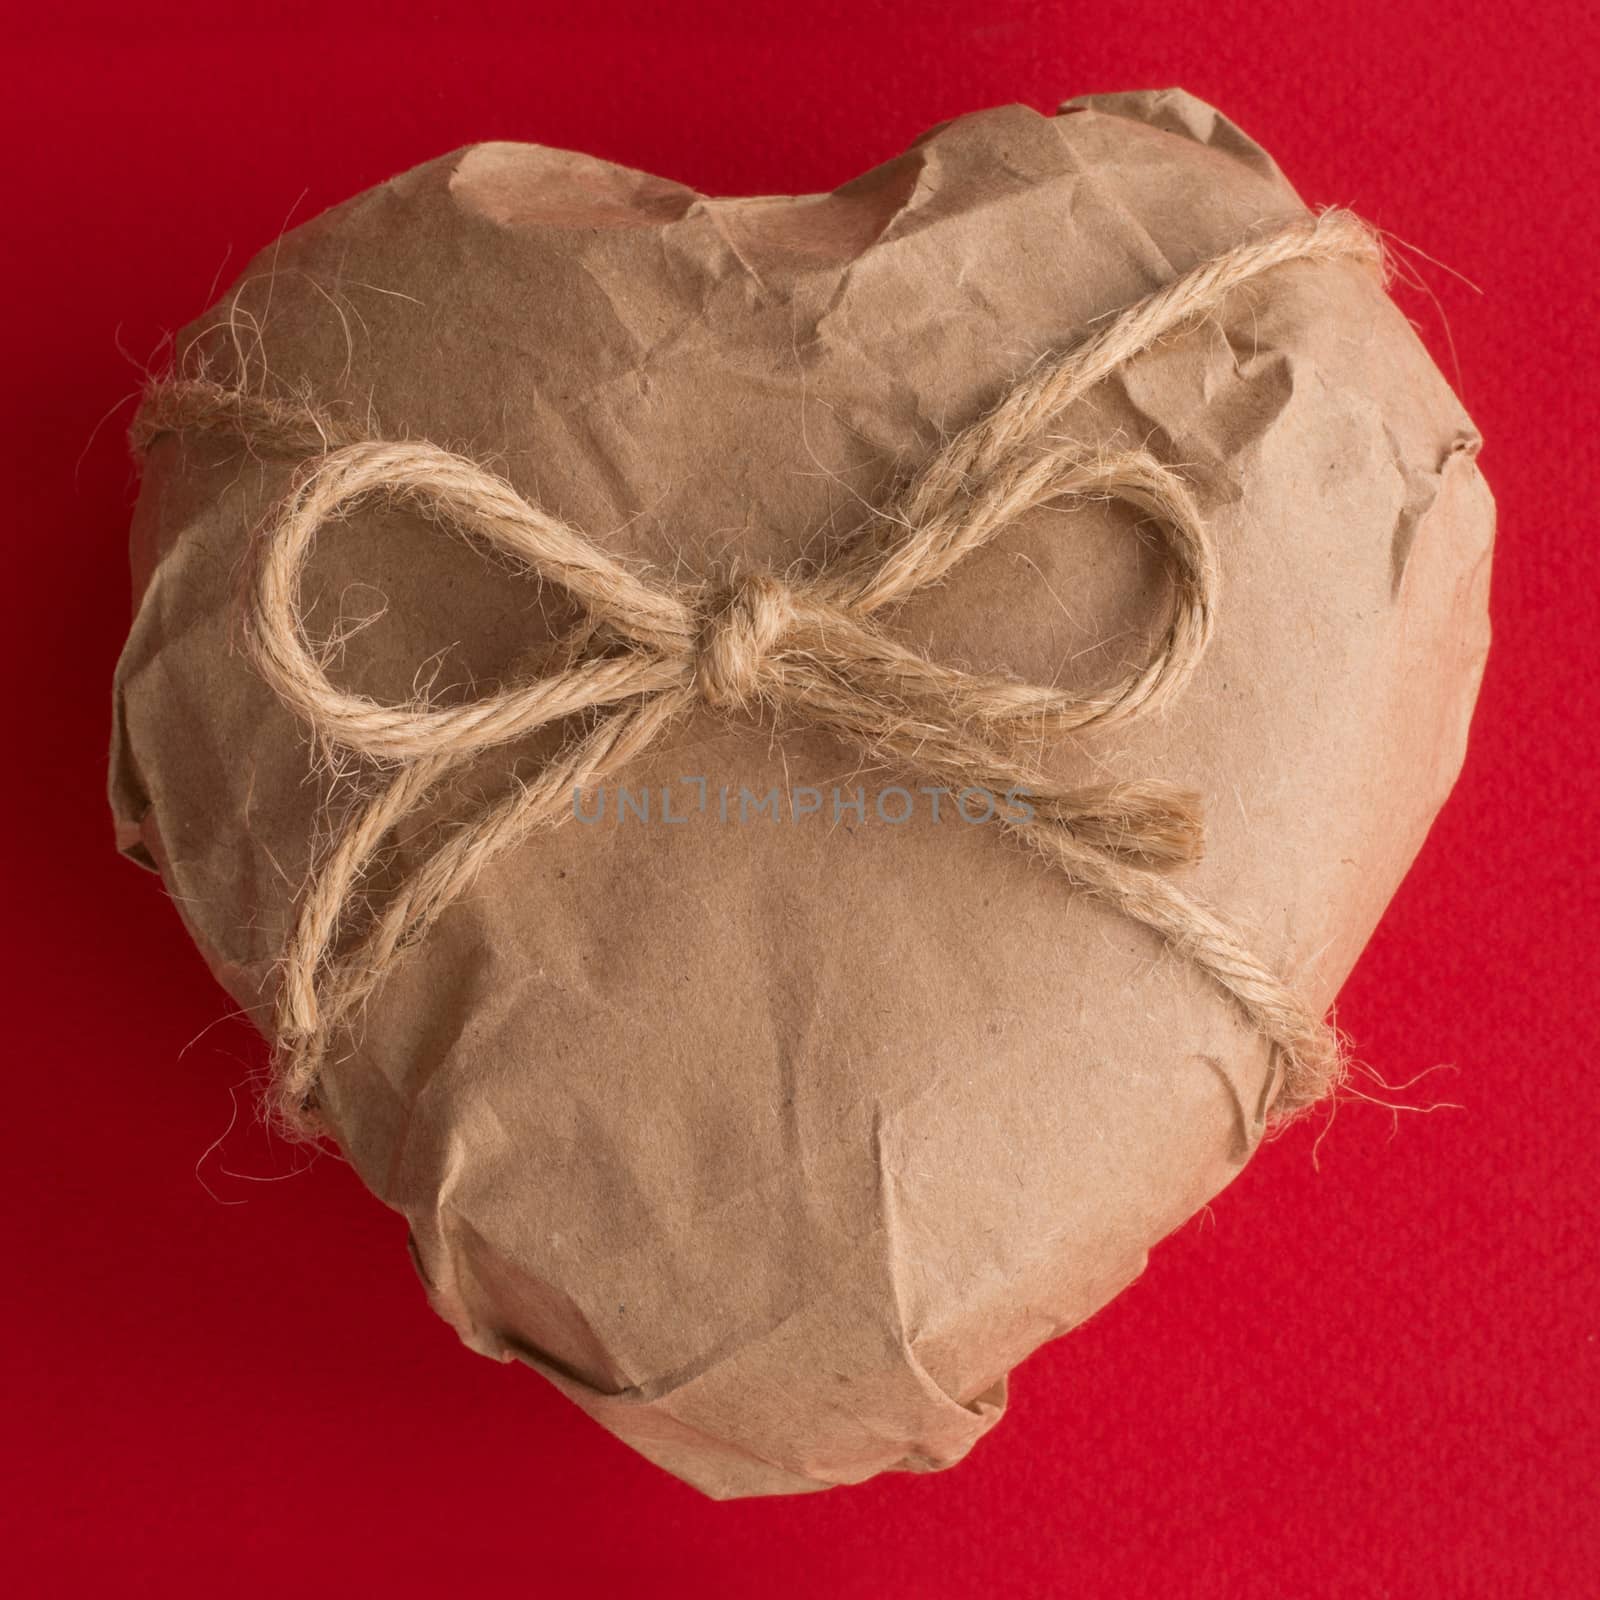 Heart in Wrapping Paper by destillat